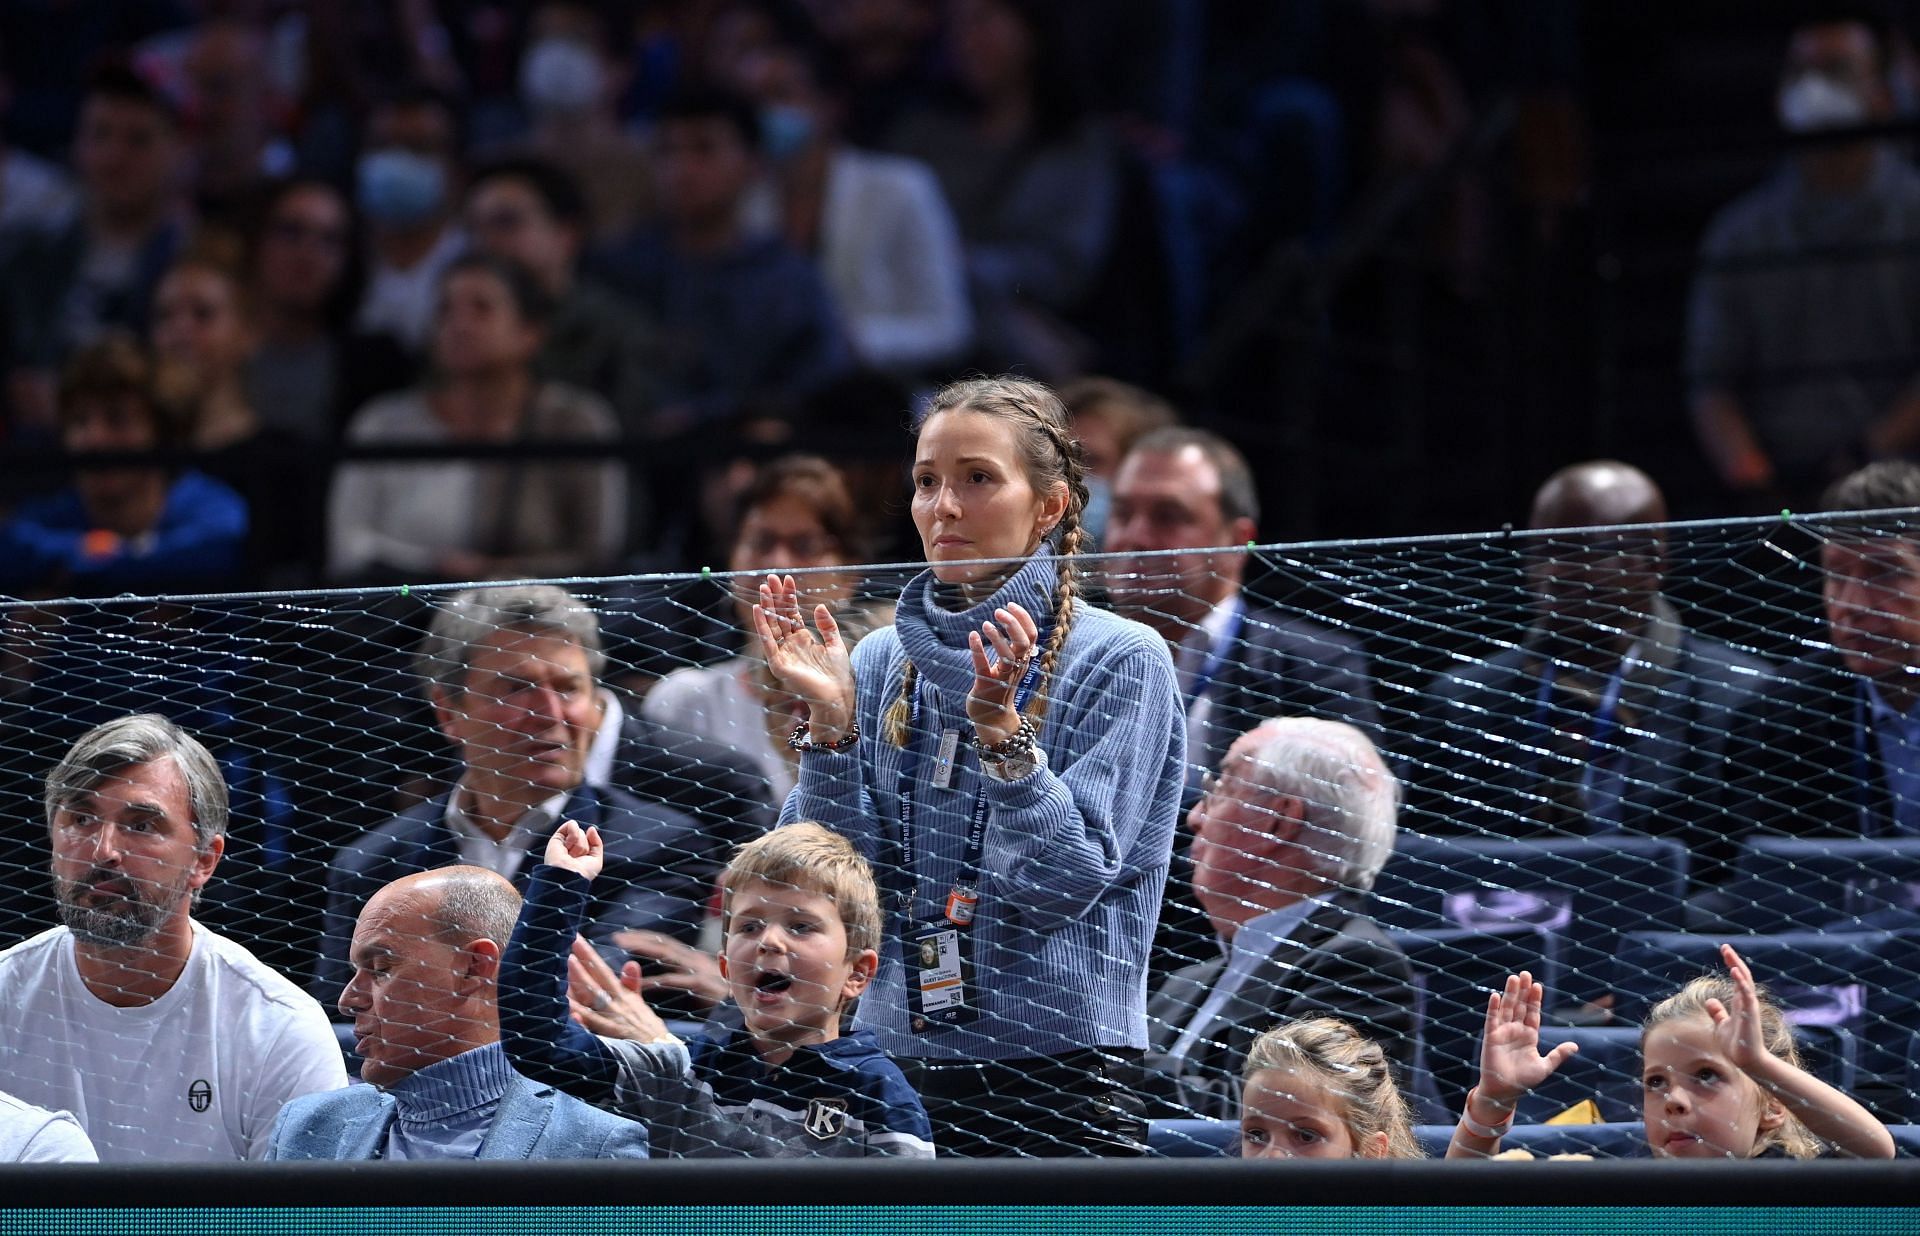 Jelena and Stefan Djokovic cheer the 21-time Grand Slam champion